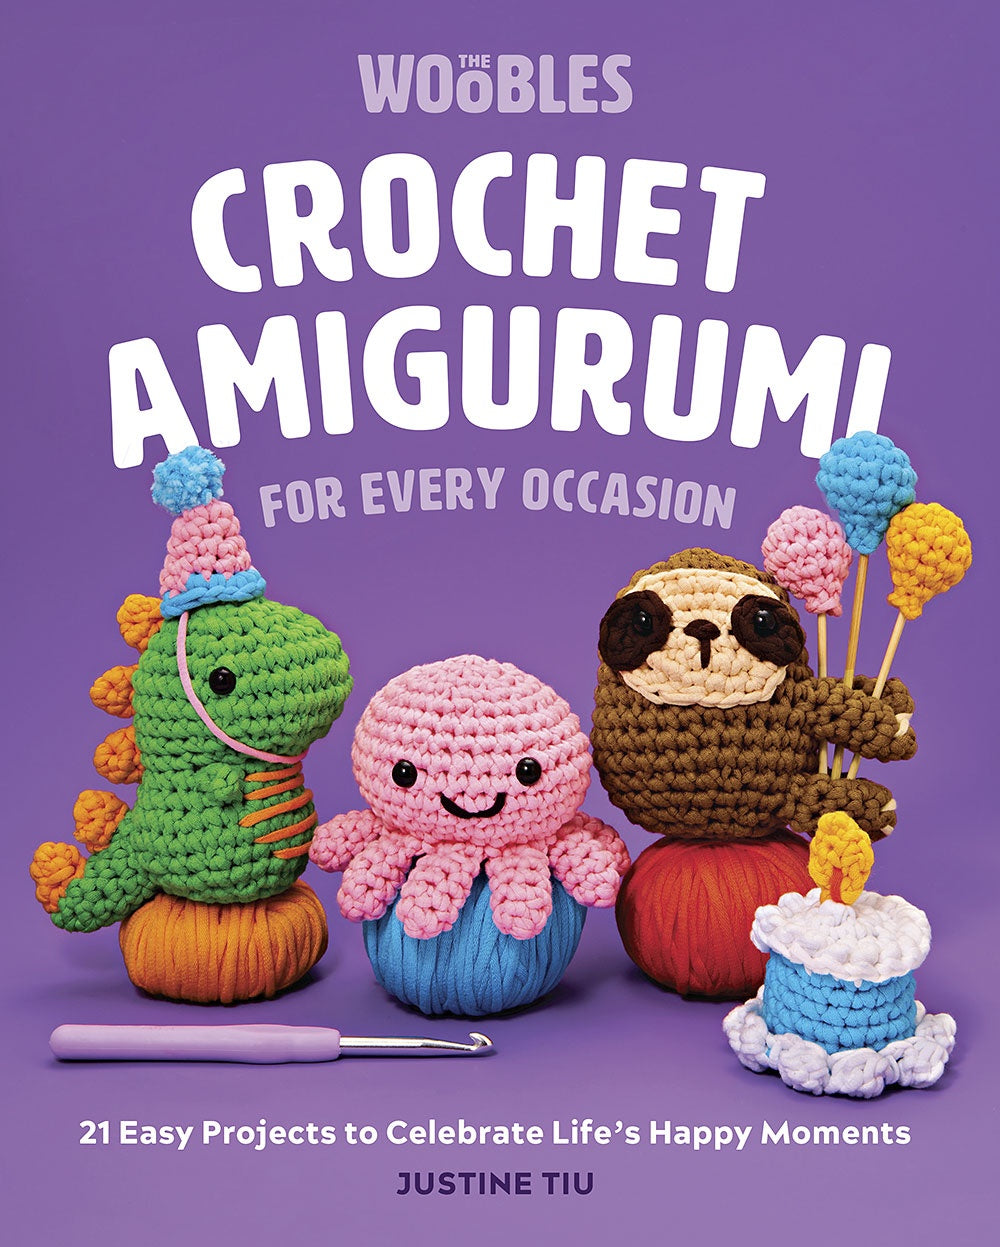 Crochet Amigurumi for Every Occasion